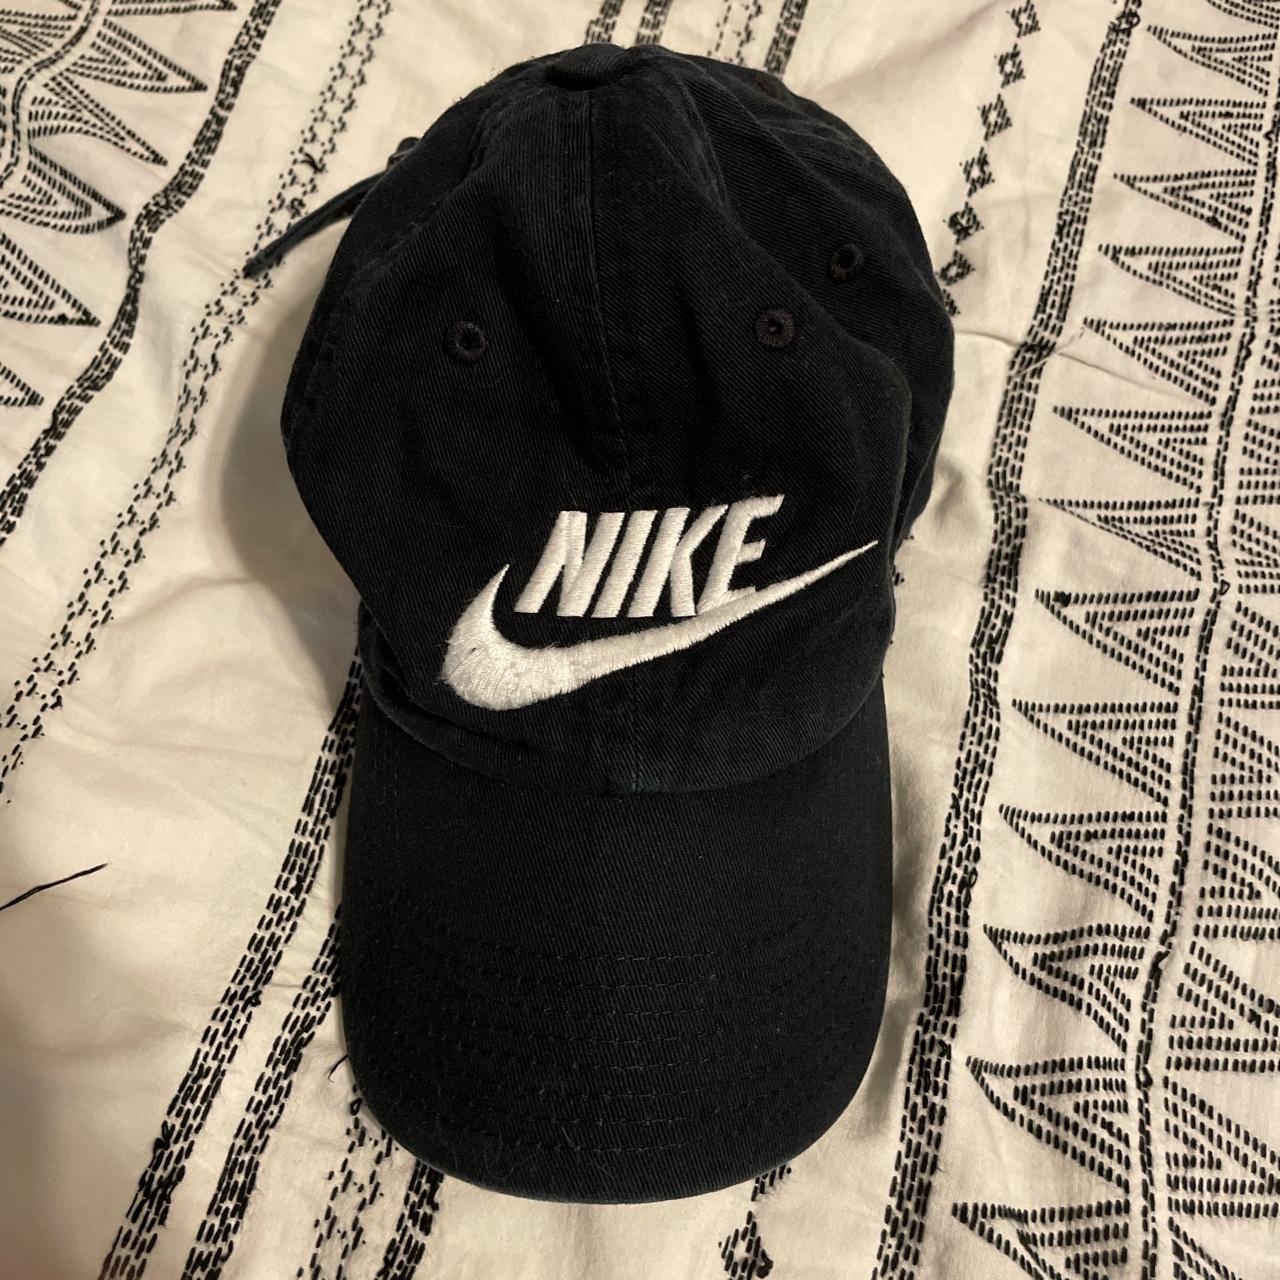 Nike baseball cap with adjustable strap - Depop